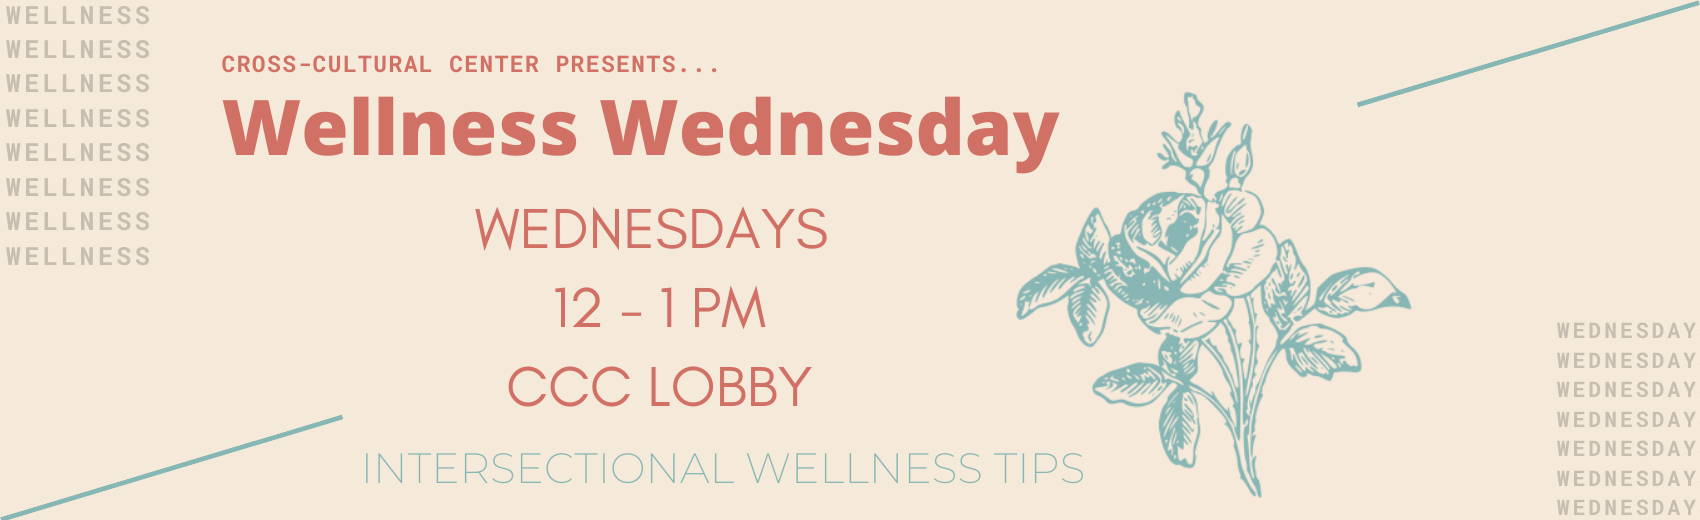 CCC-Wellness-Wednesdays.png